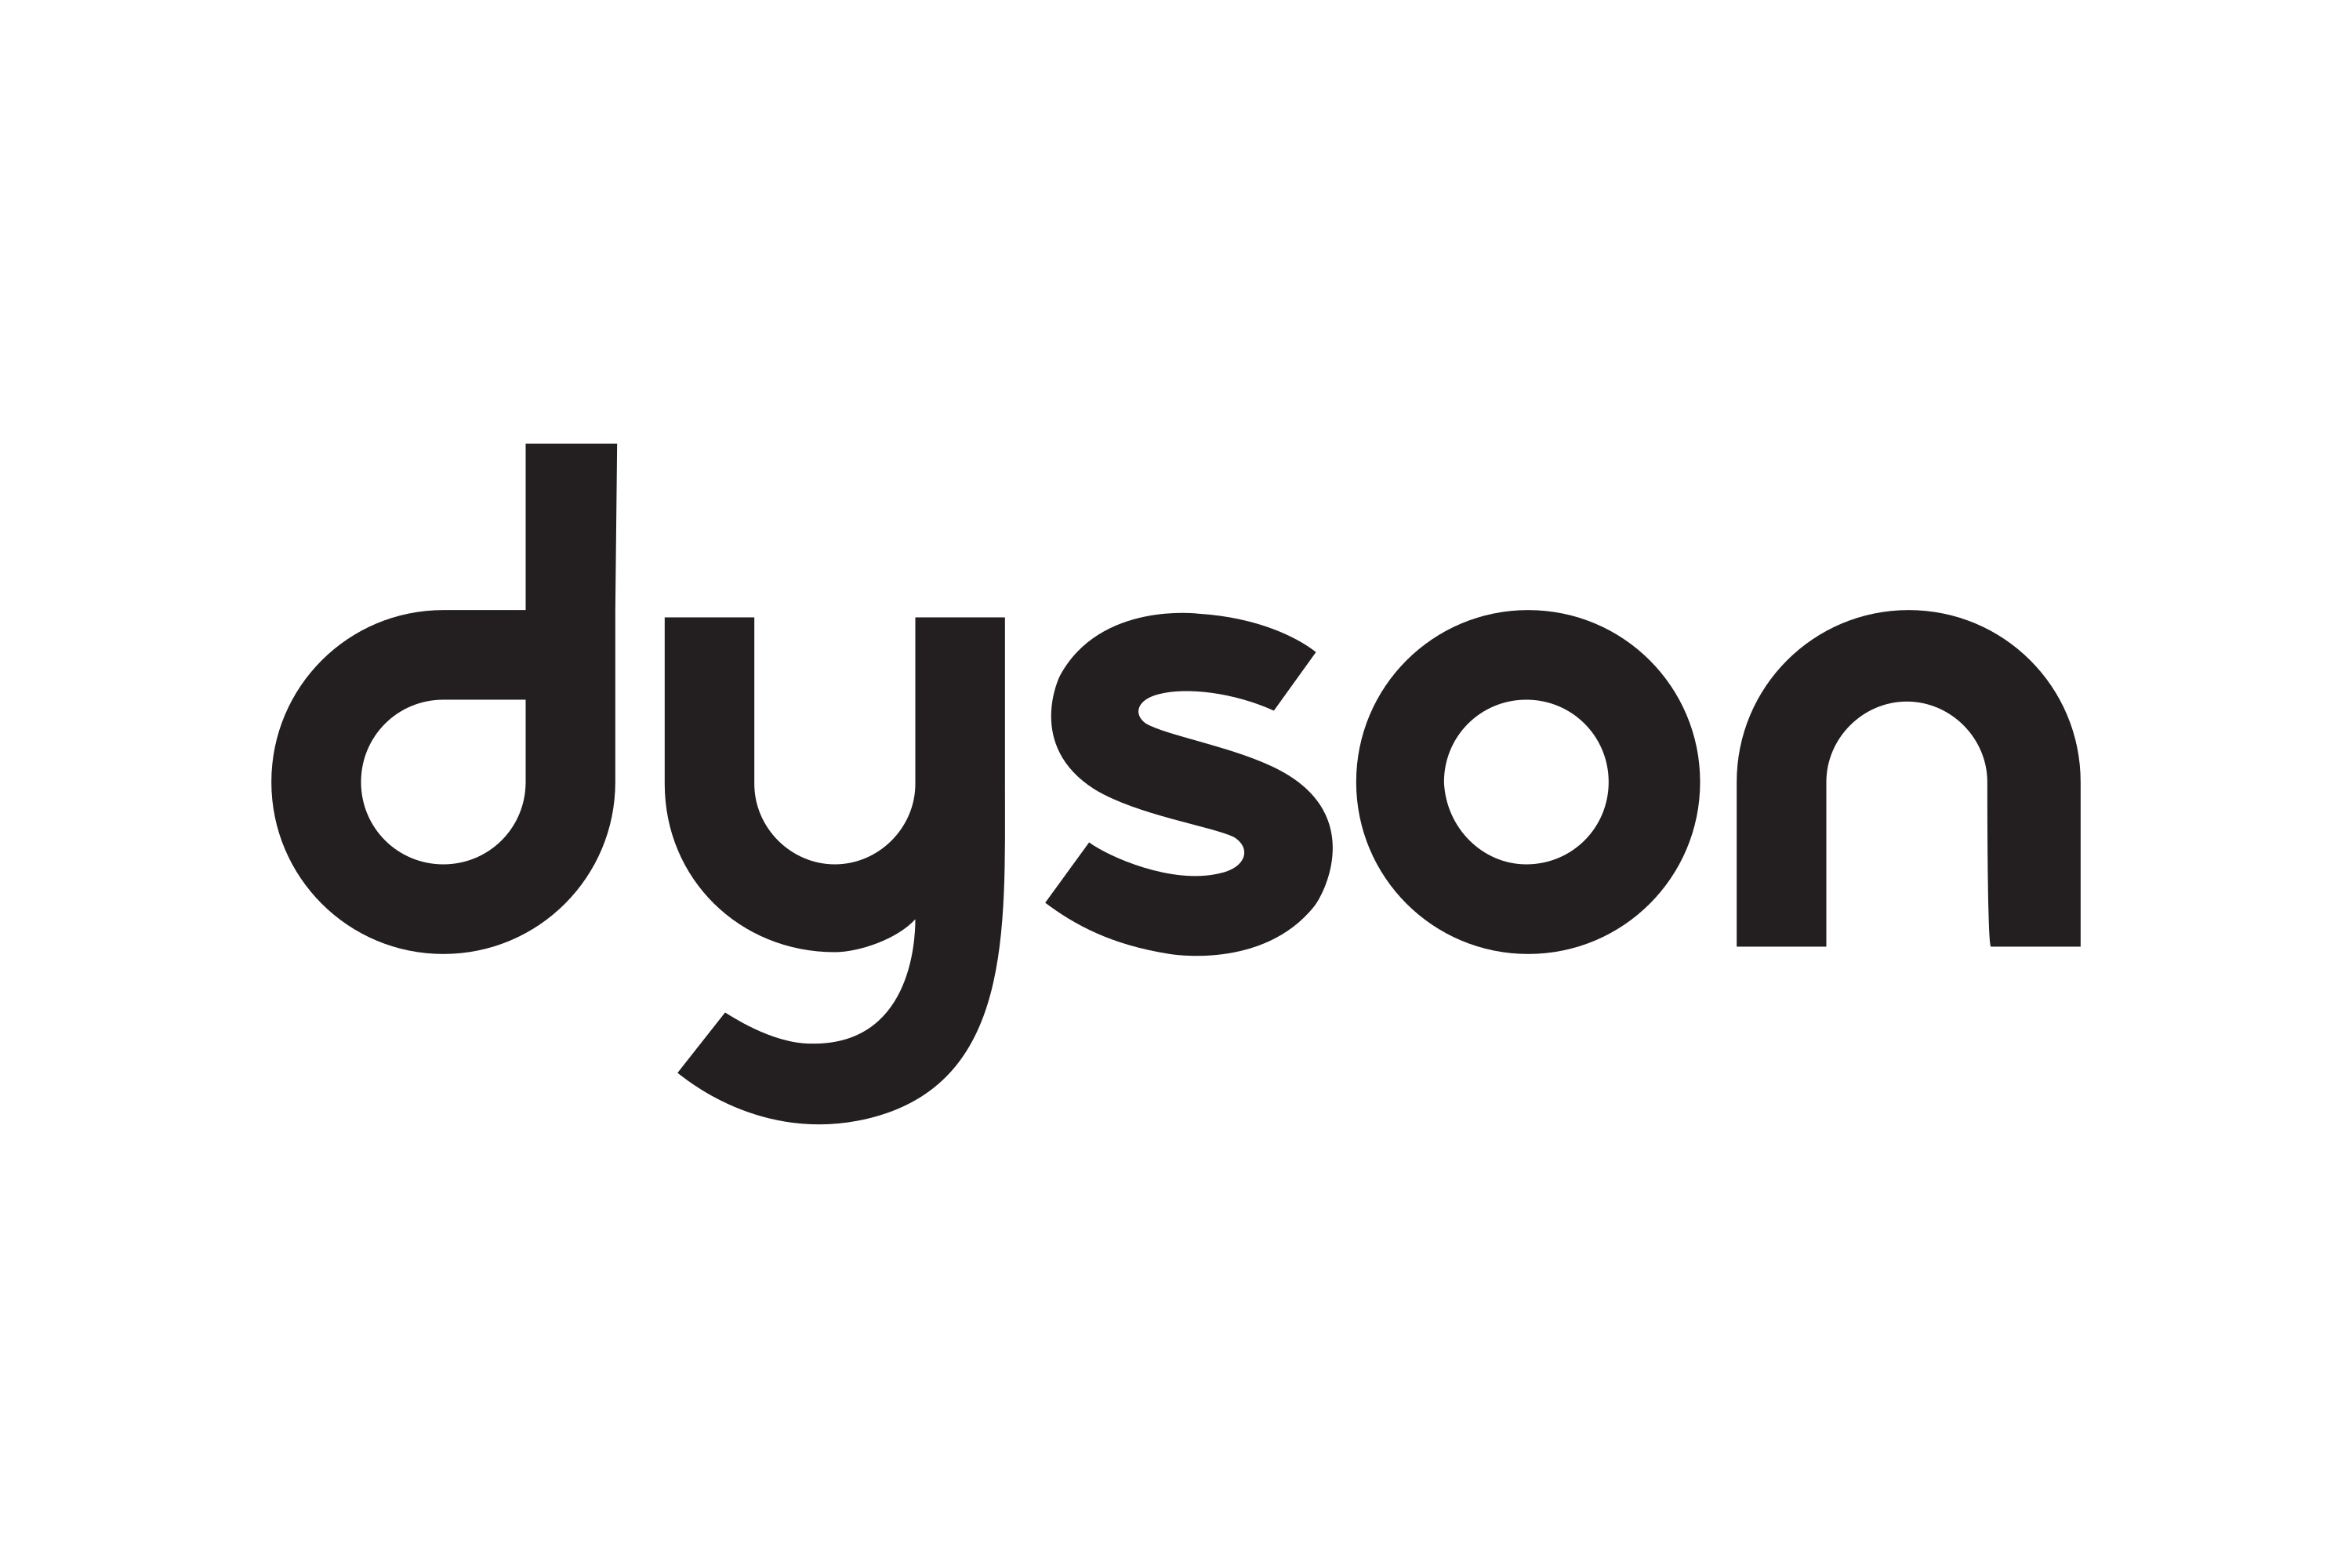 Download Dyson Logo in SVG Vector or PNG File Format - Logo.wine